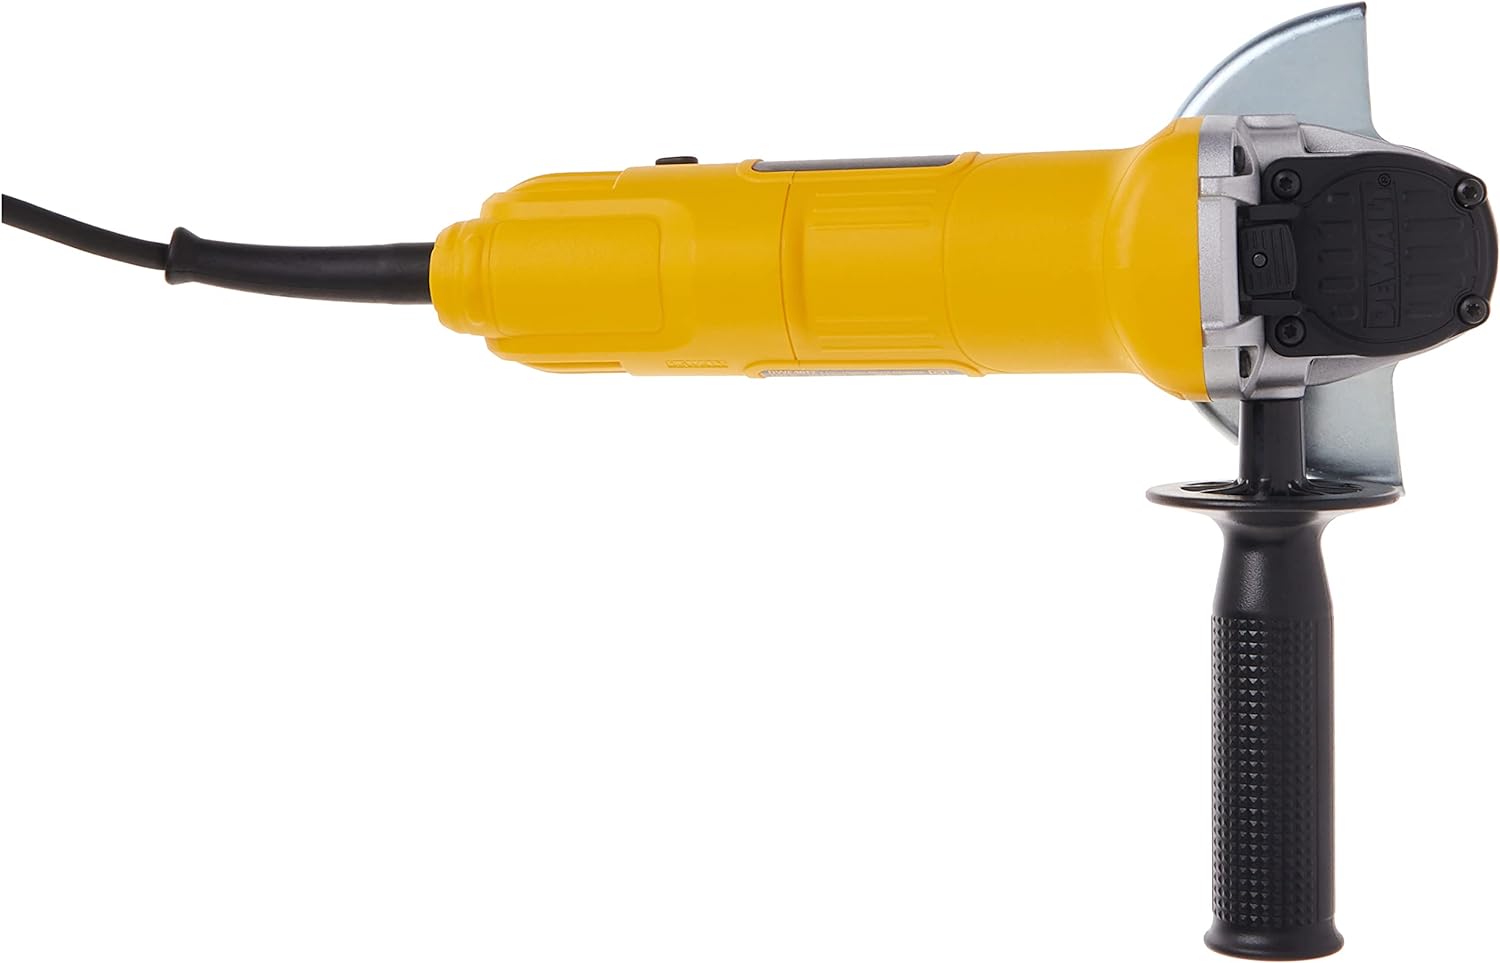 DEWALT Angle Grinder Tool, 4-1/2-Inch, Paddle Switch, 7-Amp (DWE4012), Small, Multi